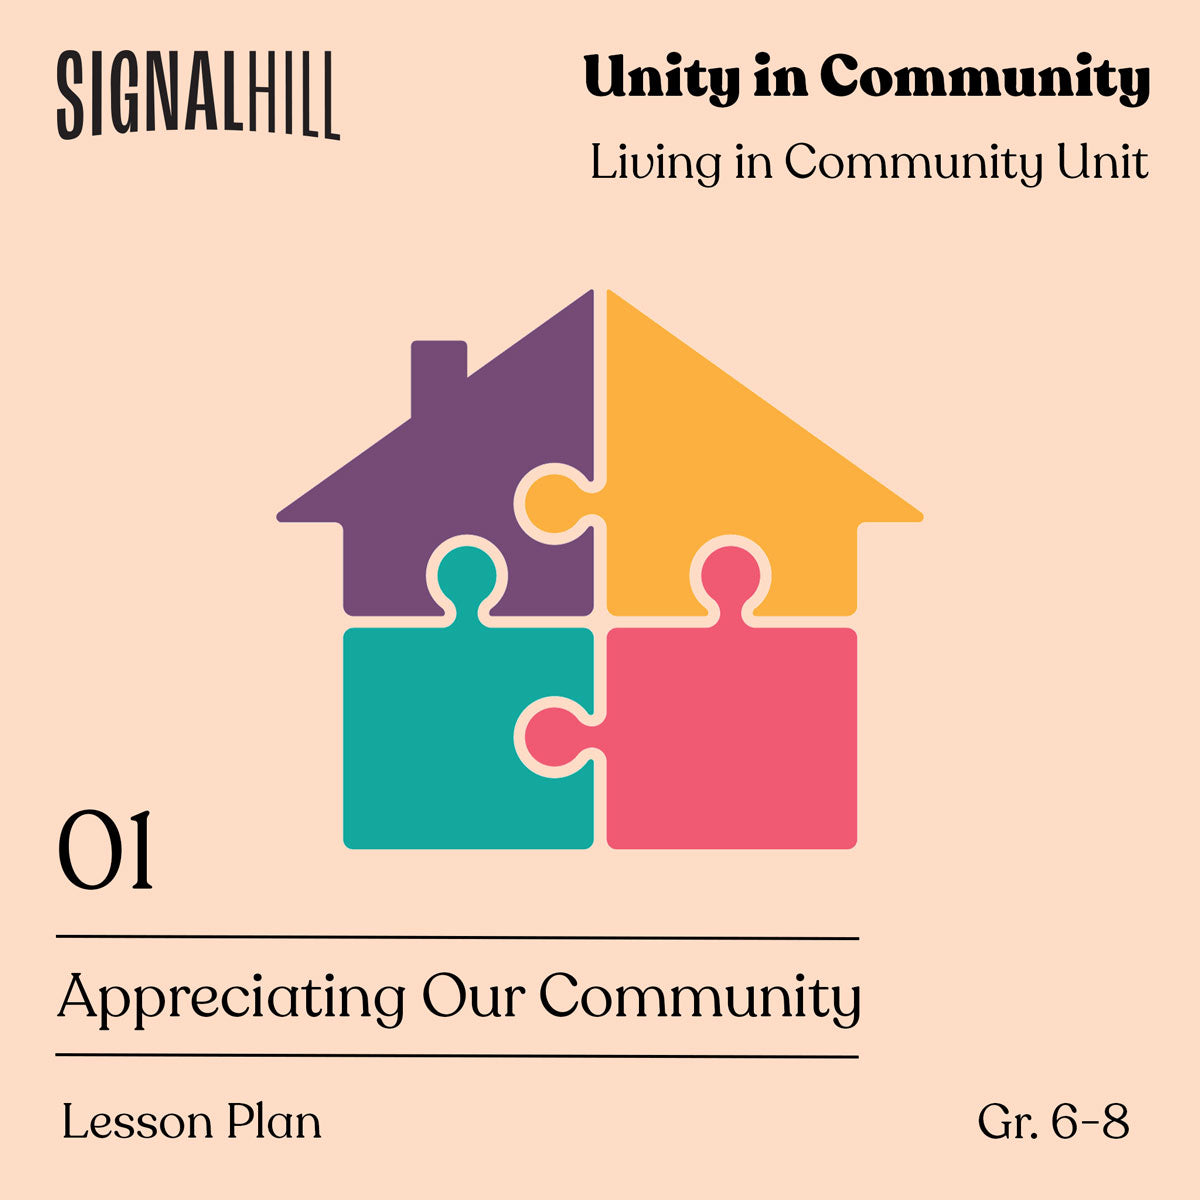 Lesson Plan 1: Appreciating Our Community